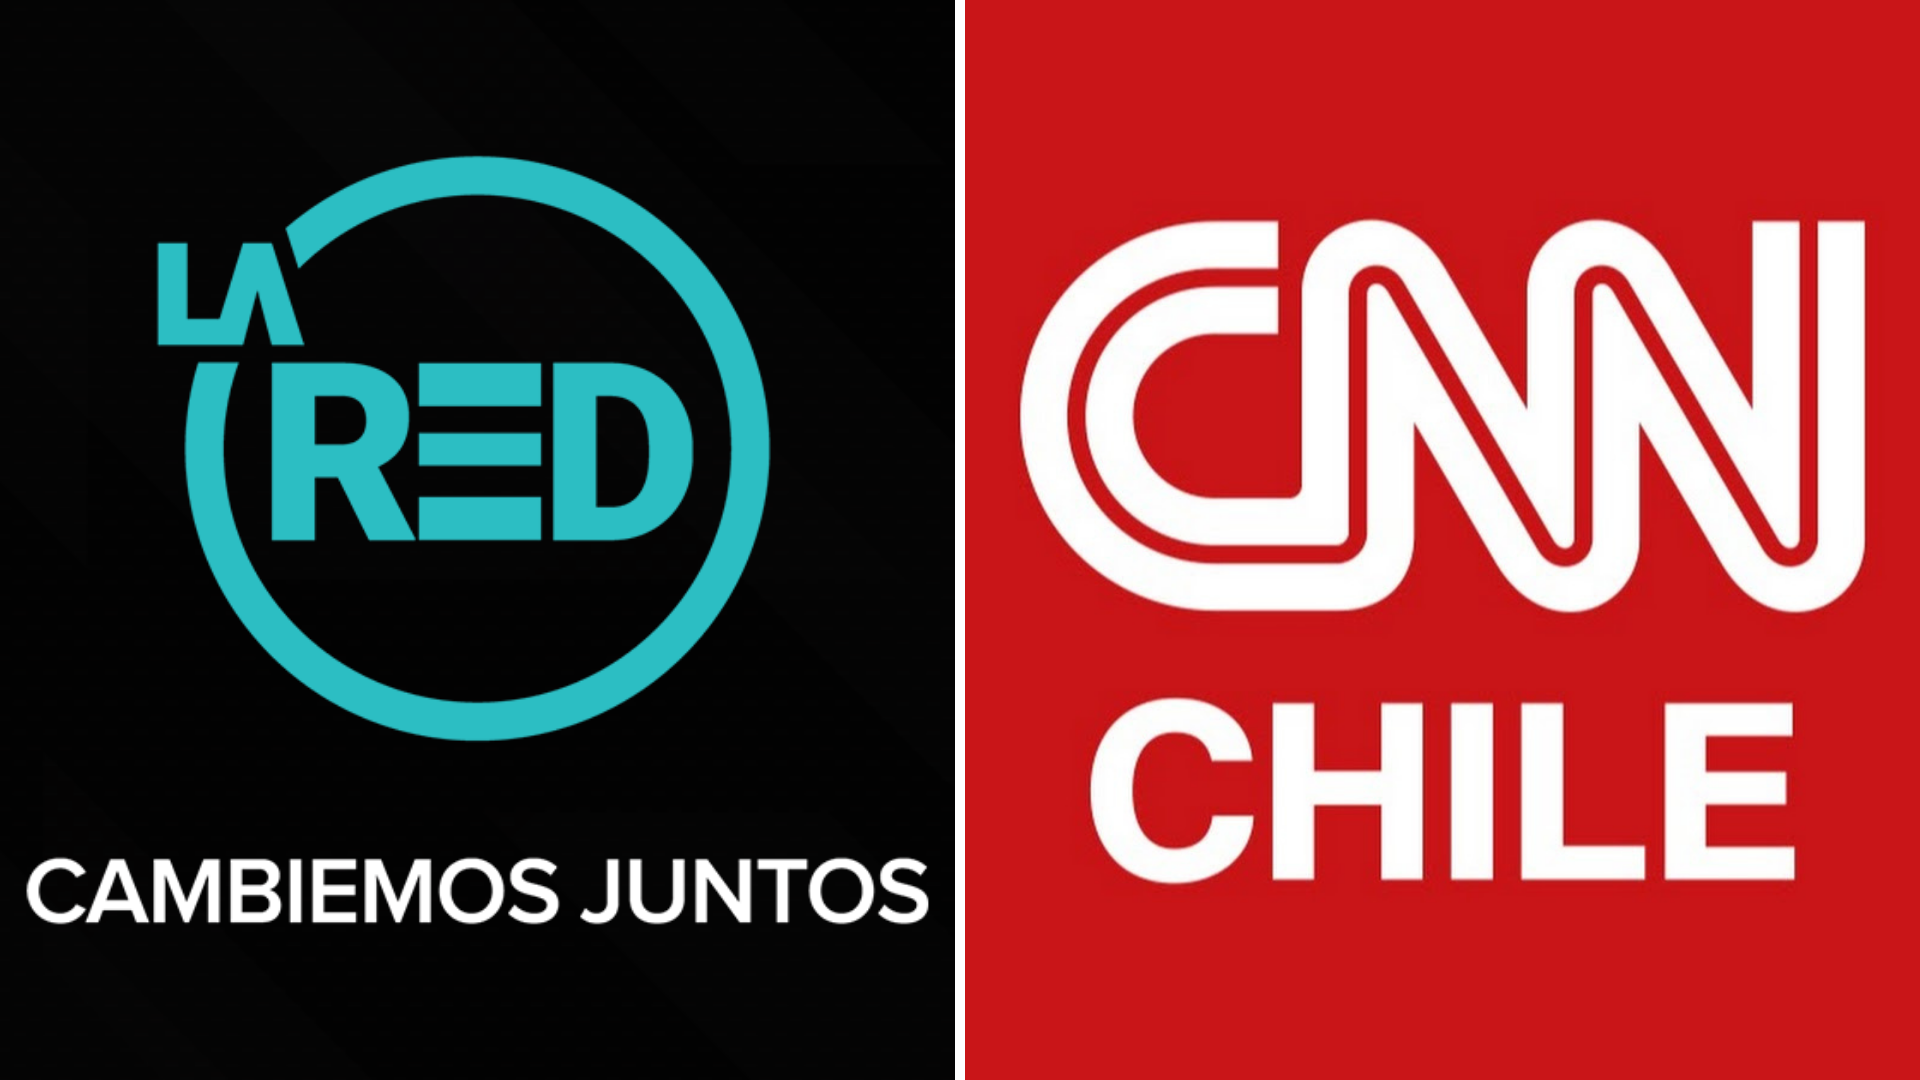 La Red CNN